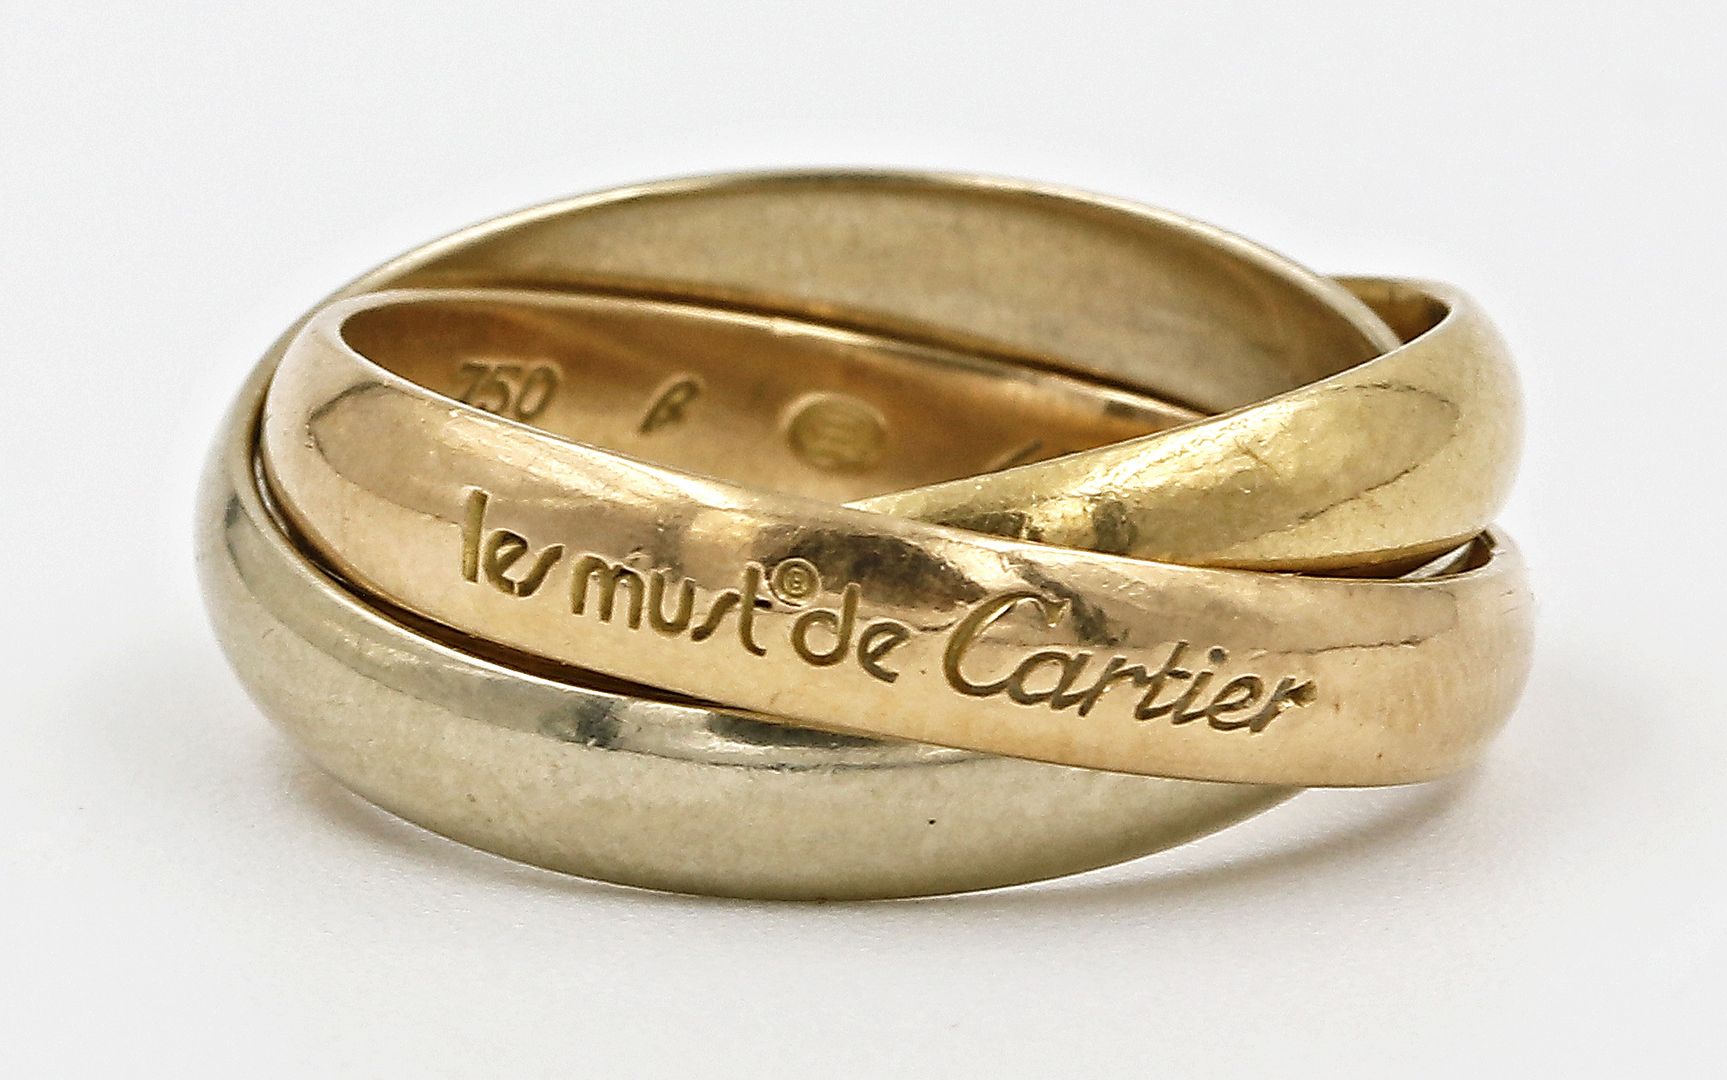 Tricolor-Ring "Trinity" bzw. "les must de Cartier".